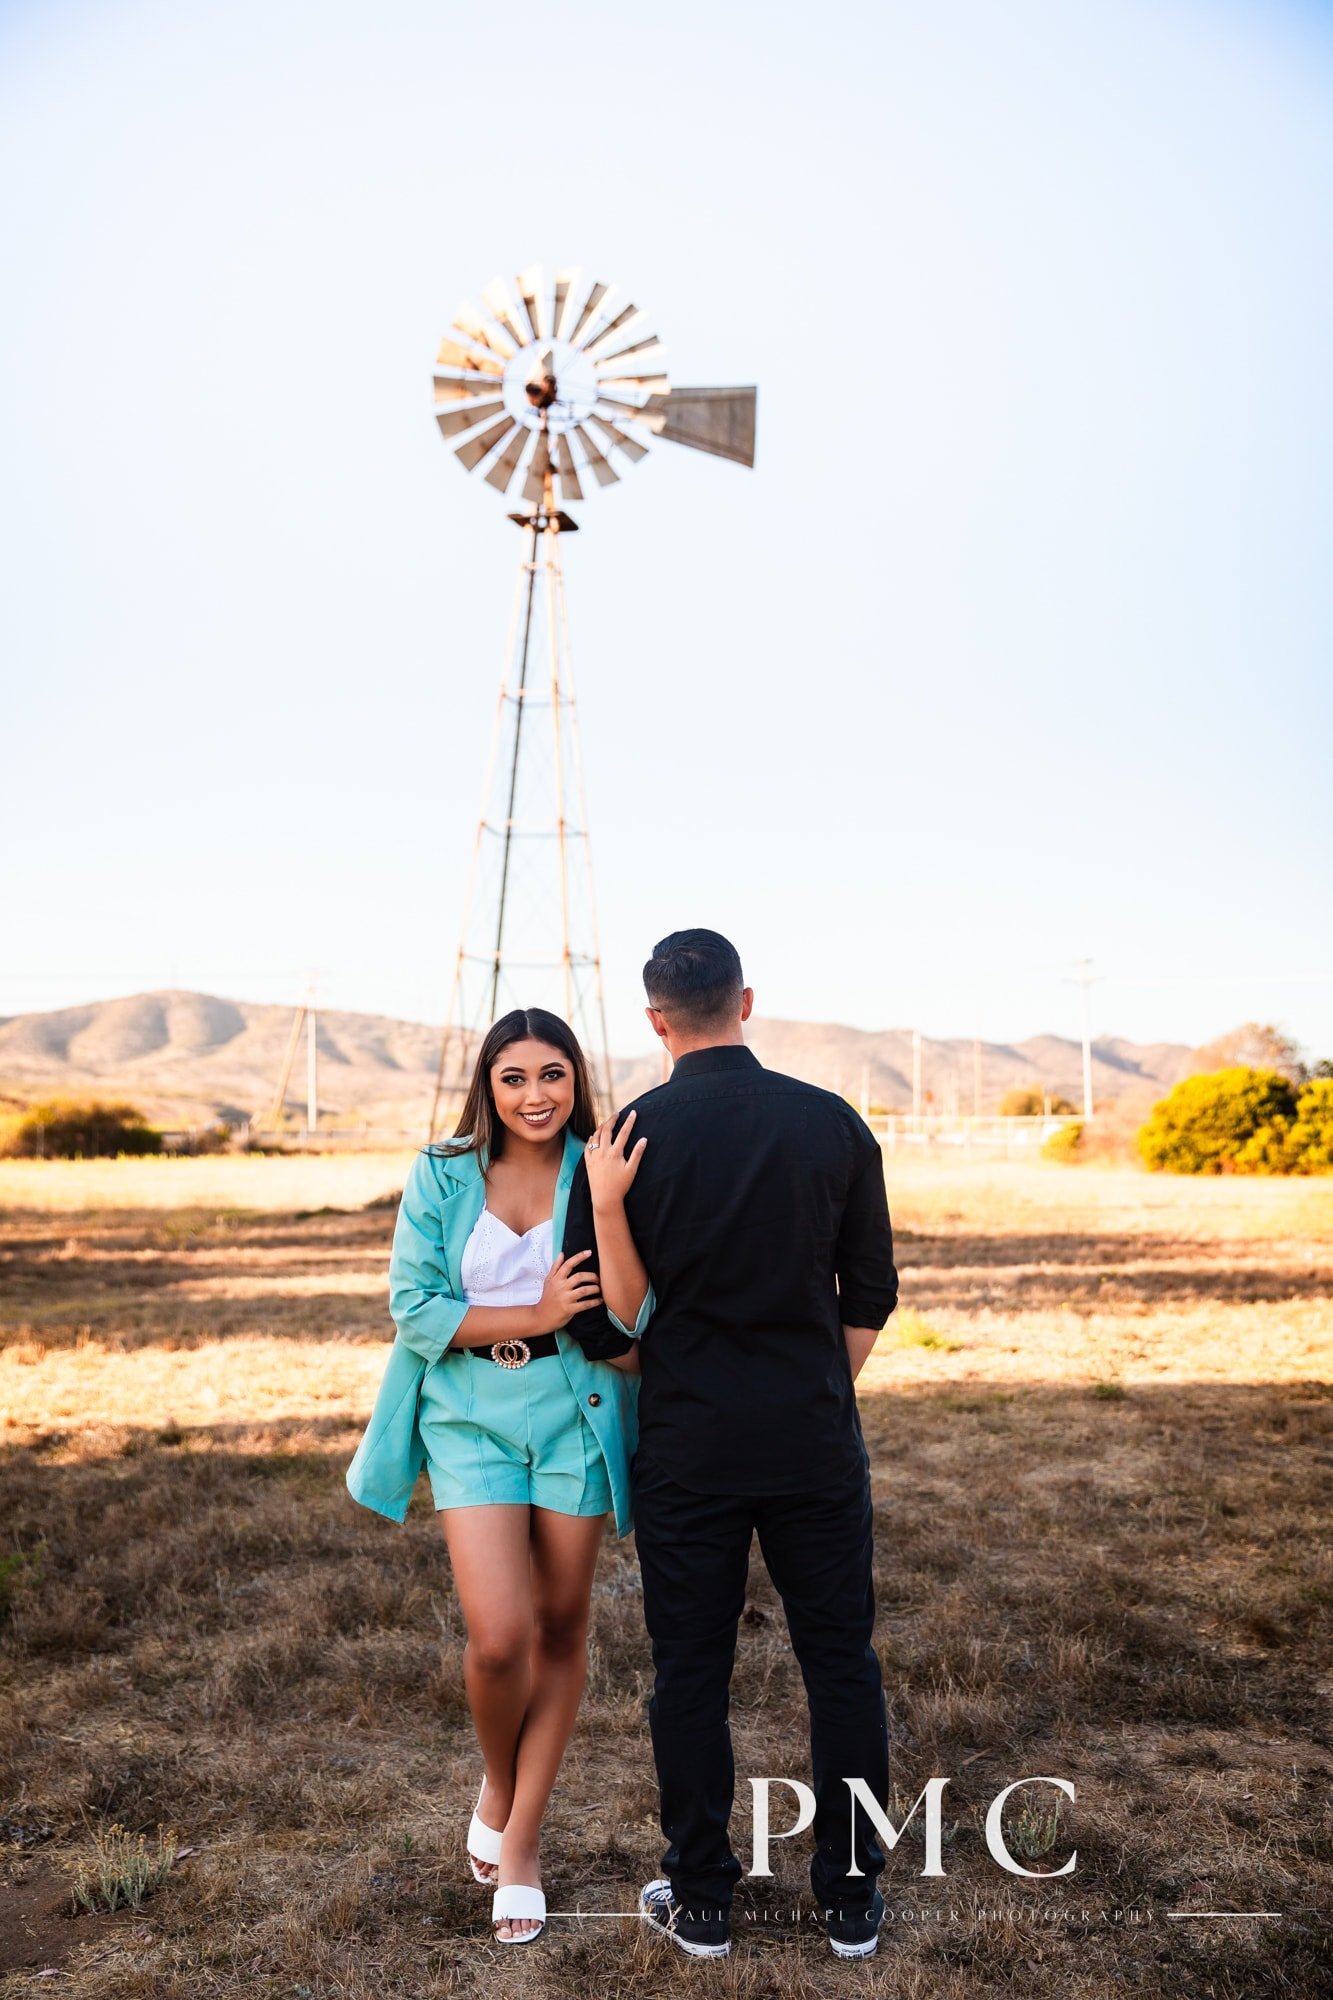 Camp Pendleton Couples Engagement Portraits - Best San Diego Wedding Photographer-14.jpg